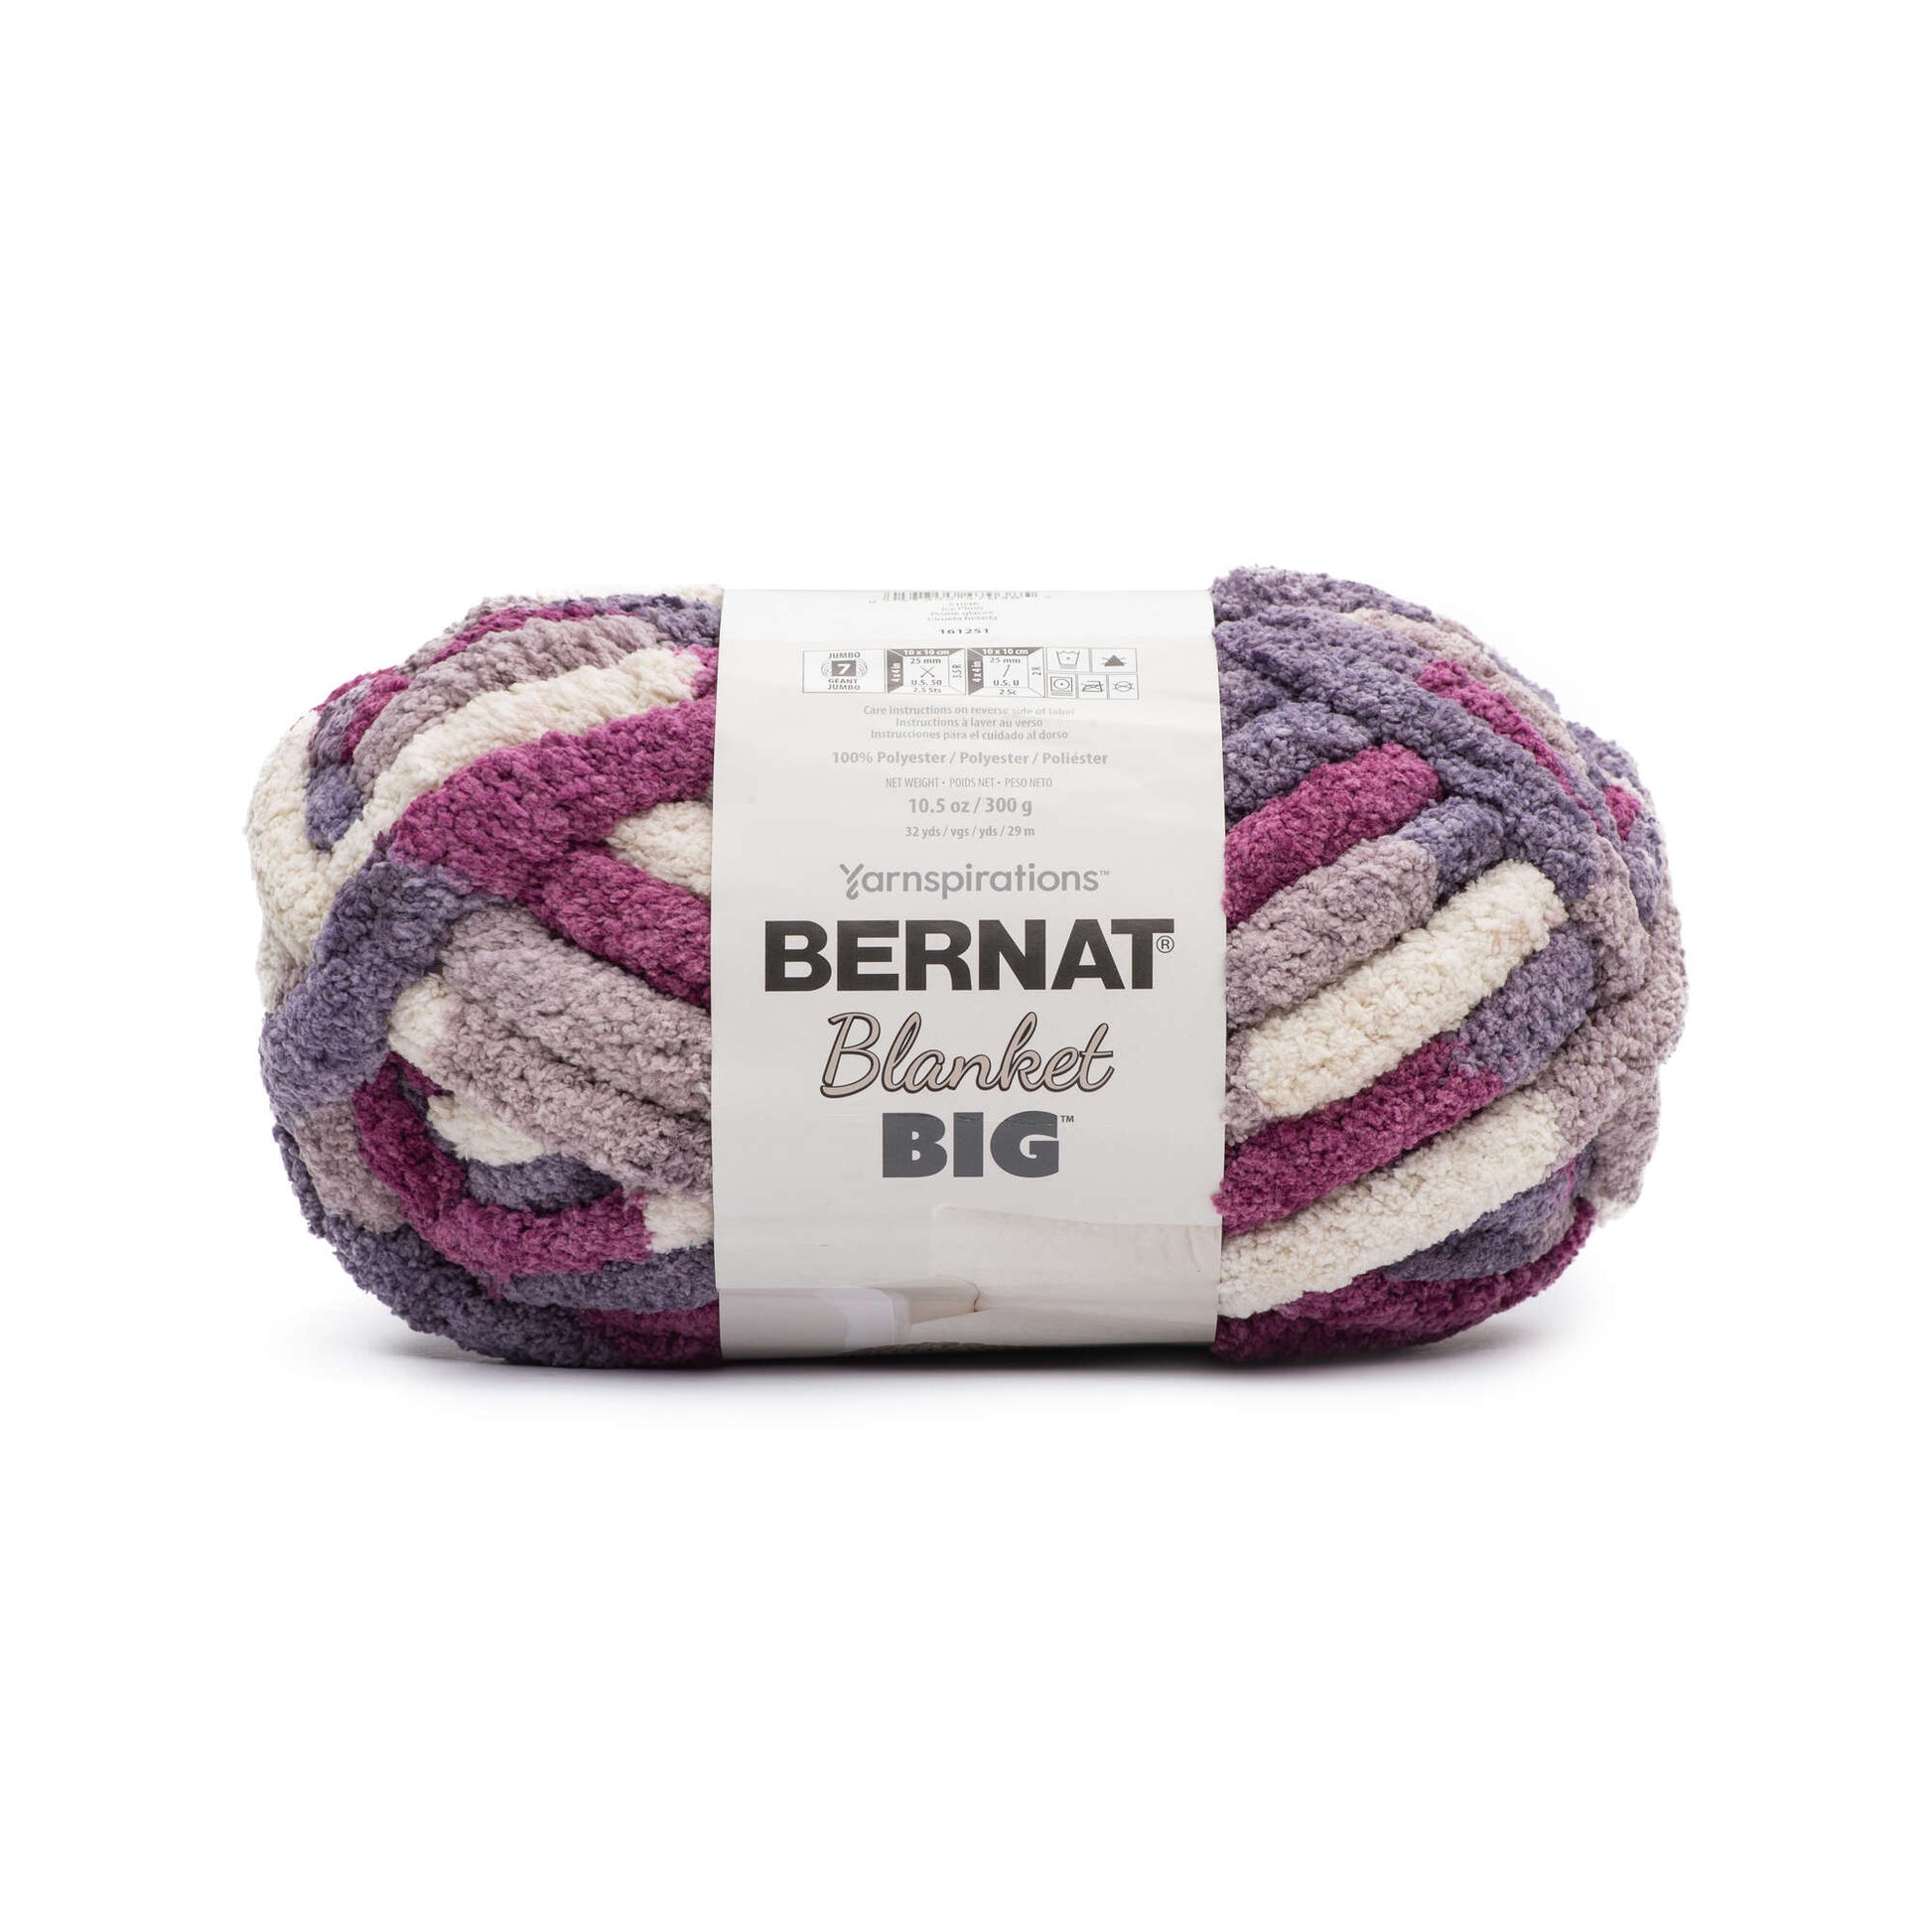 2 Count Bernat 10.5 Oz Big Blanket Color By Nature 26113 French Vanilla Yarn